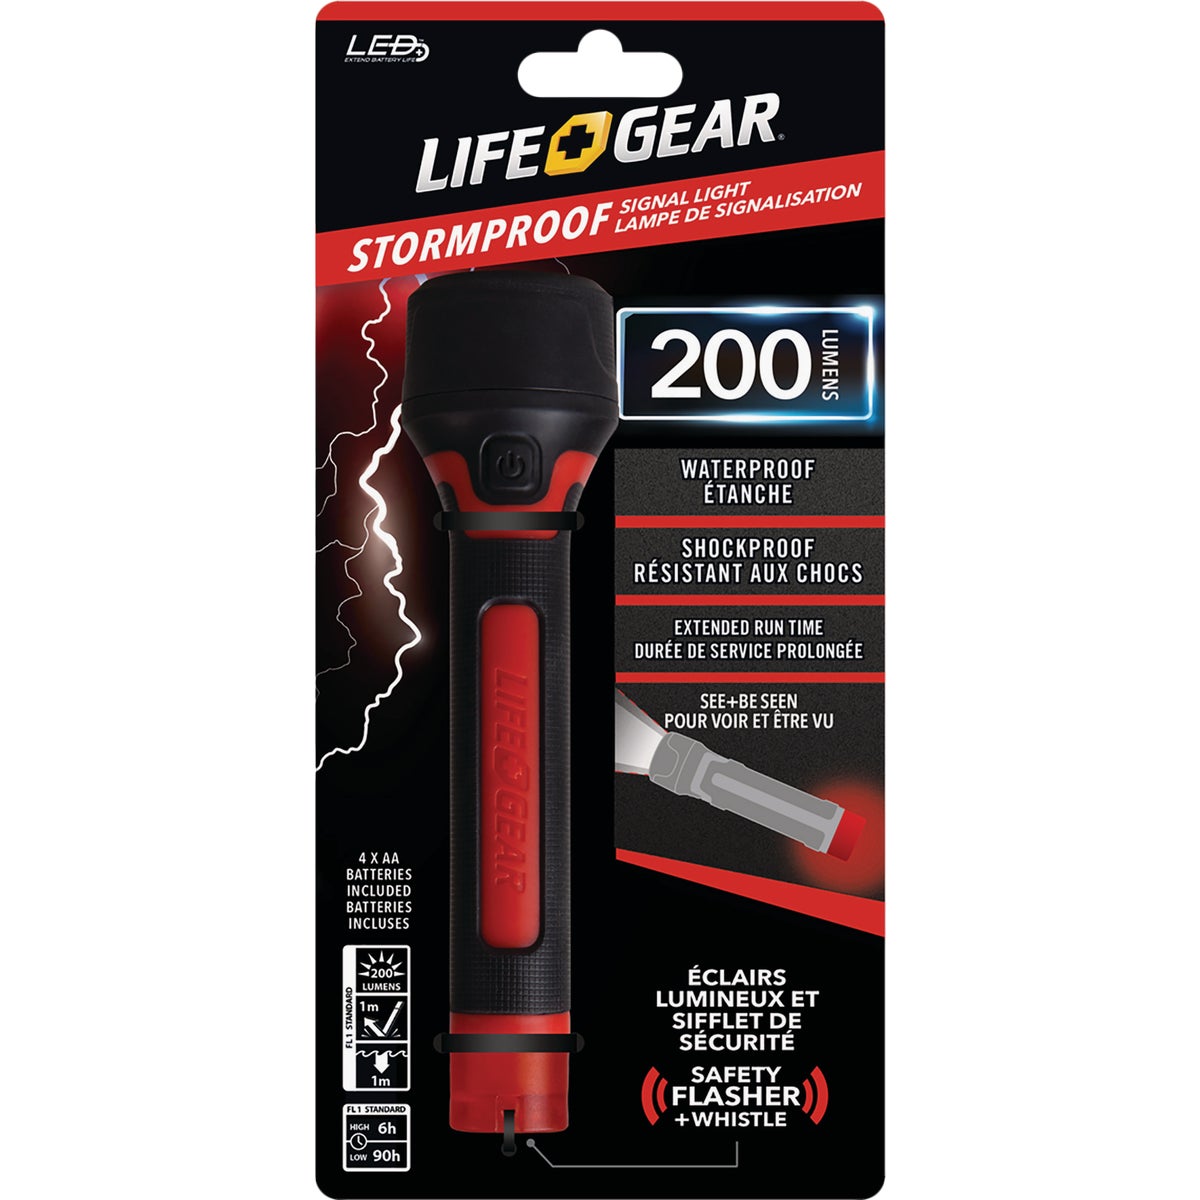 Life Gear Storm Proof 4AA 200 Lm. LED Flashlight & Signal Light